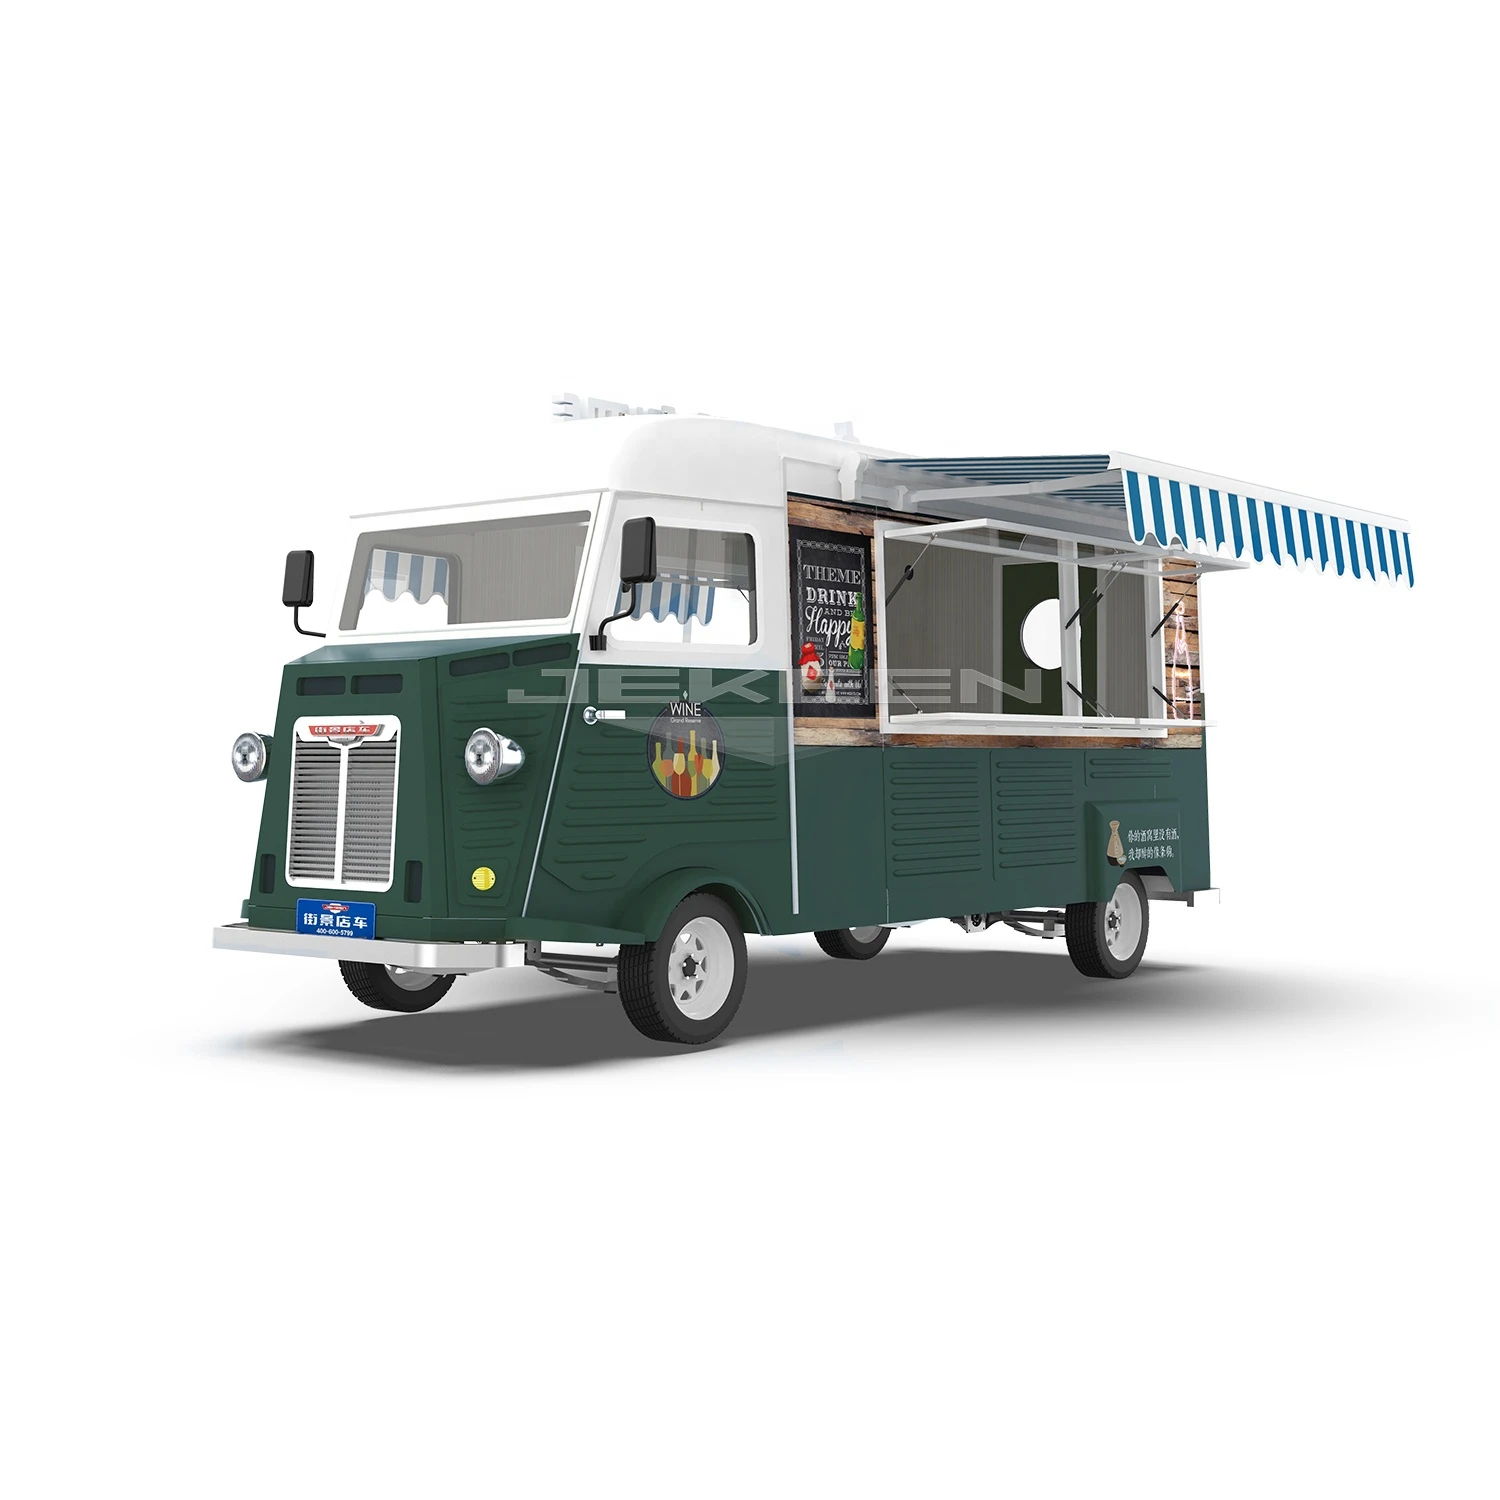 JEKEEN new customized mobile food truck  equipment of BARTON